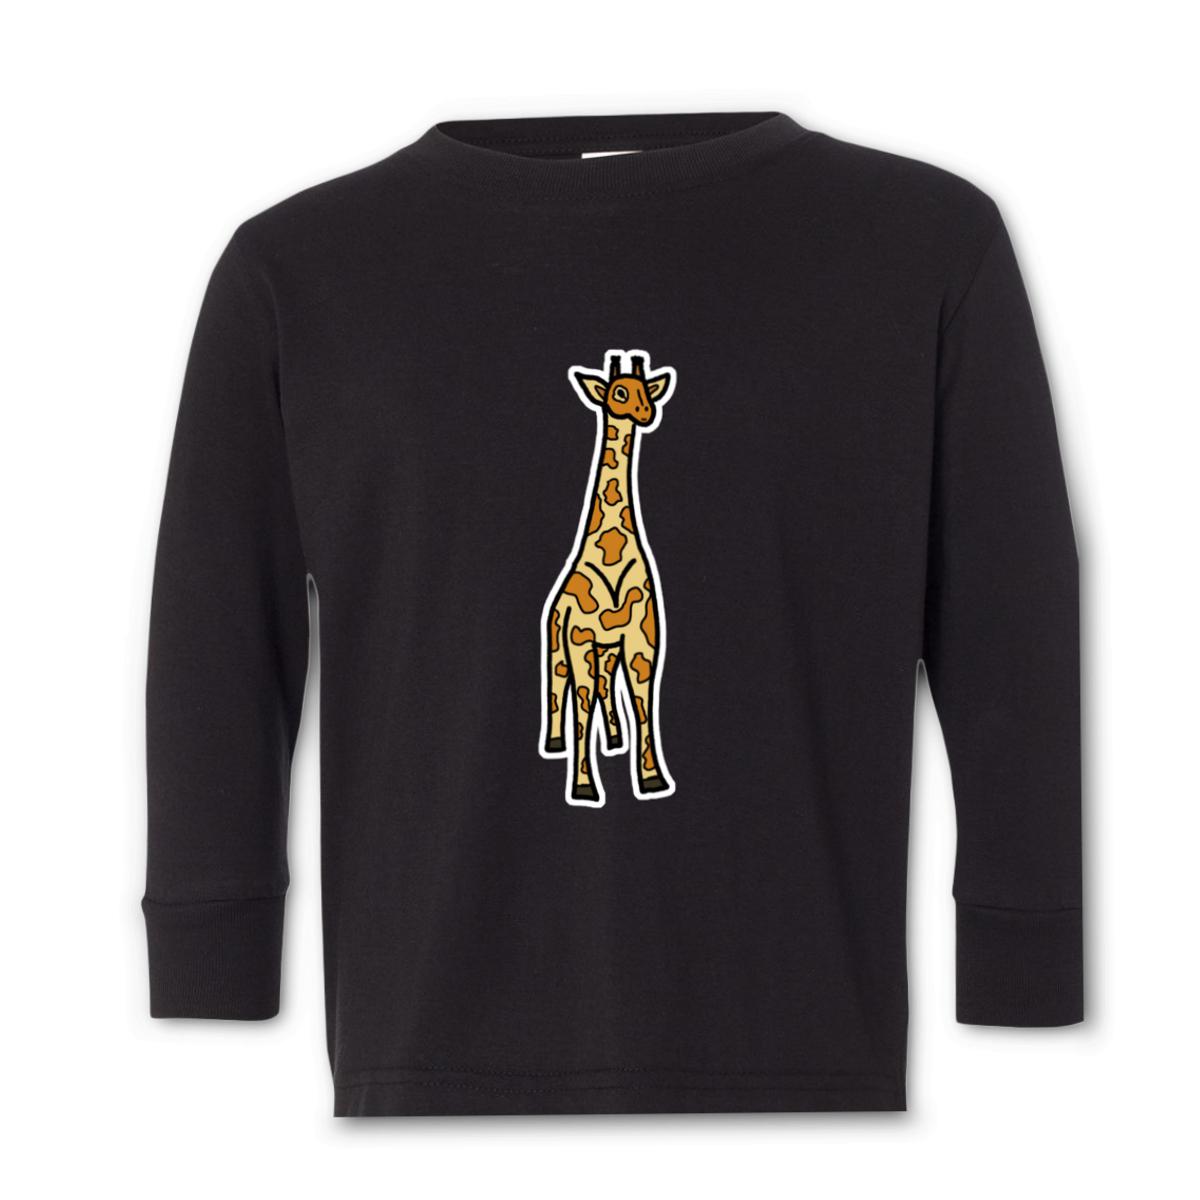 Toy Giraffe Toddler Long Sleeve Tee 56T black